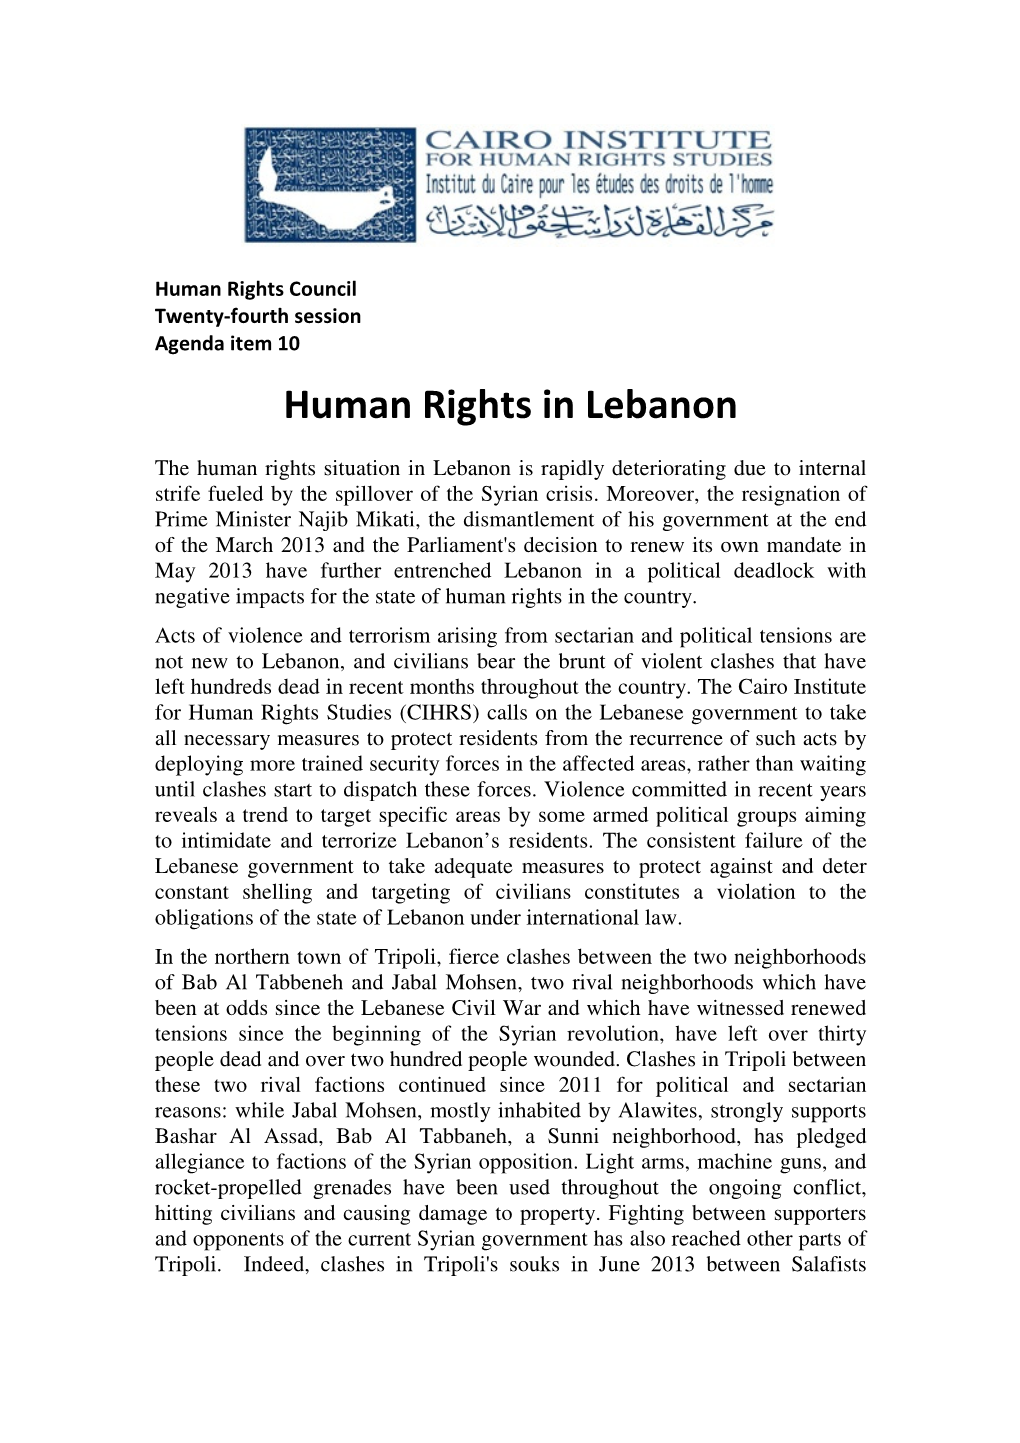 Human Rights in Lebanon